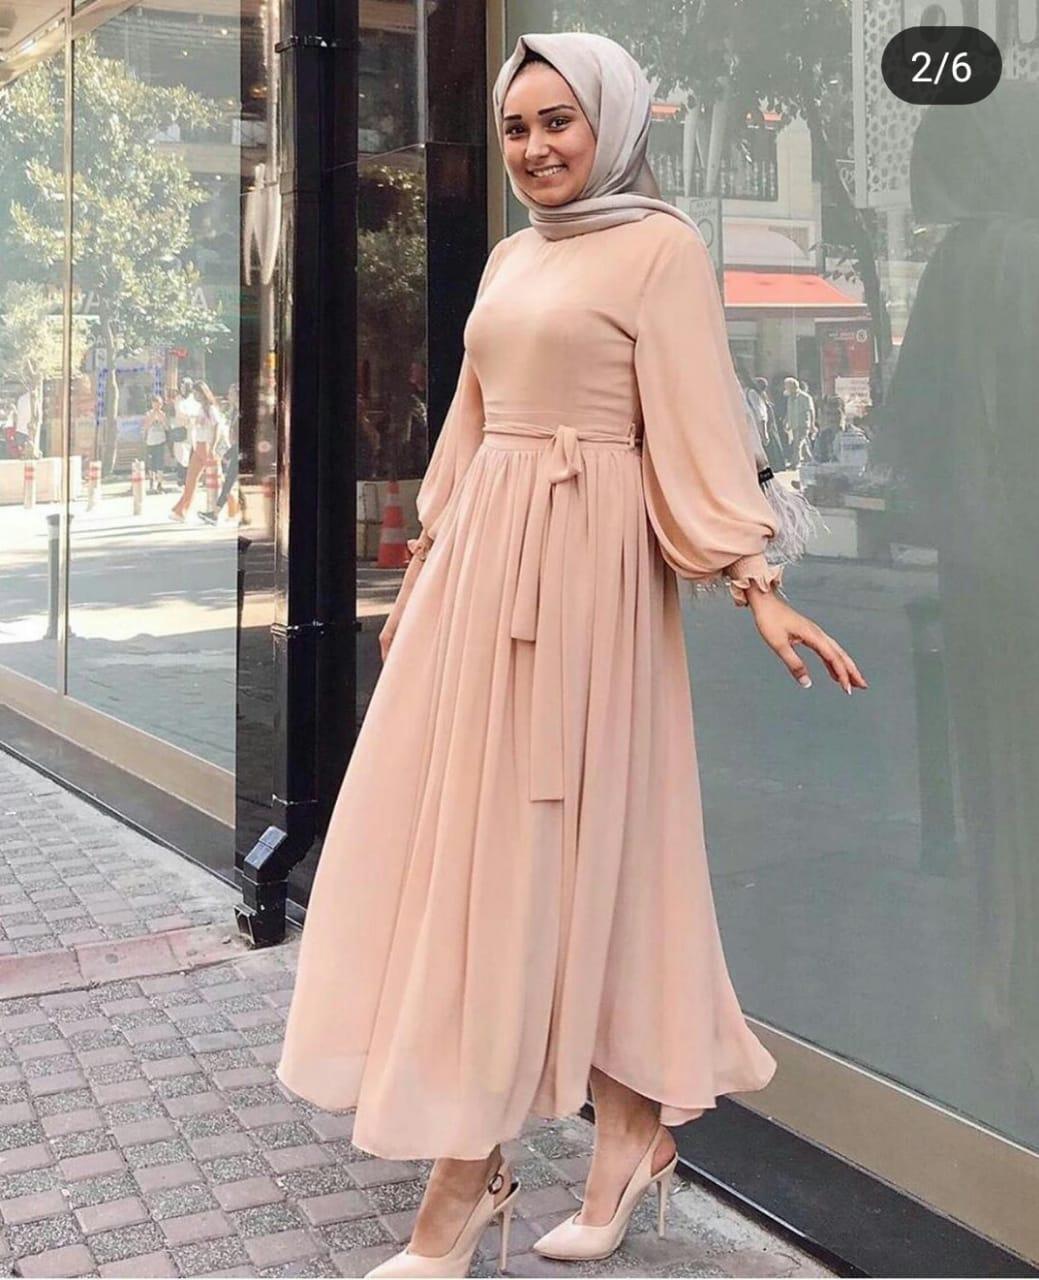 Baju Muslim Modern Gamis PALOMA DRESS Bahan WOLFICE Baju Gamis Terusan Wanita Paling Laris Dan Trendy Baju Panjang Polos Muslim Dress Pesta Terbaru Maxi Muslimah Termurah Pakaian Modis Simple Casual Terbaru 2019